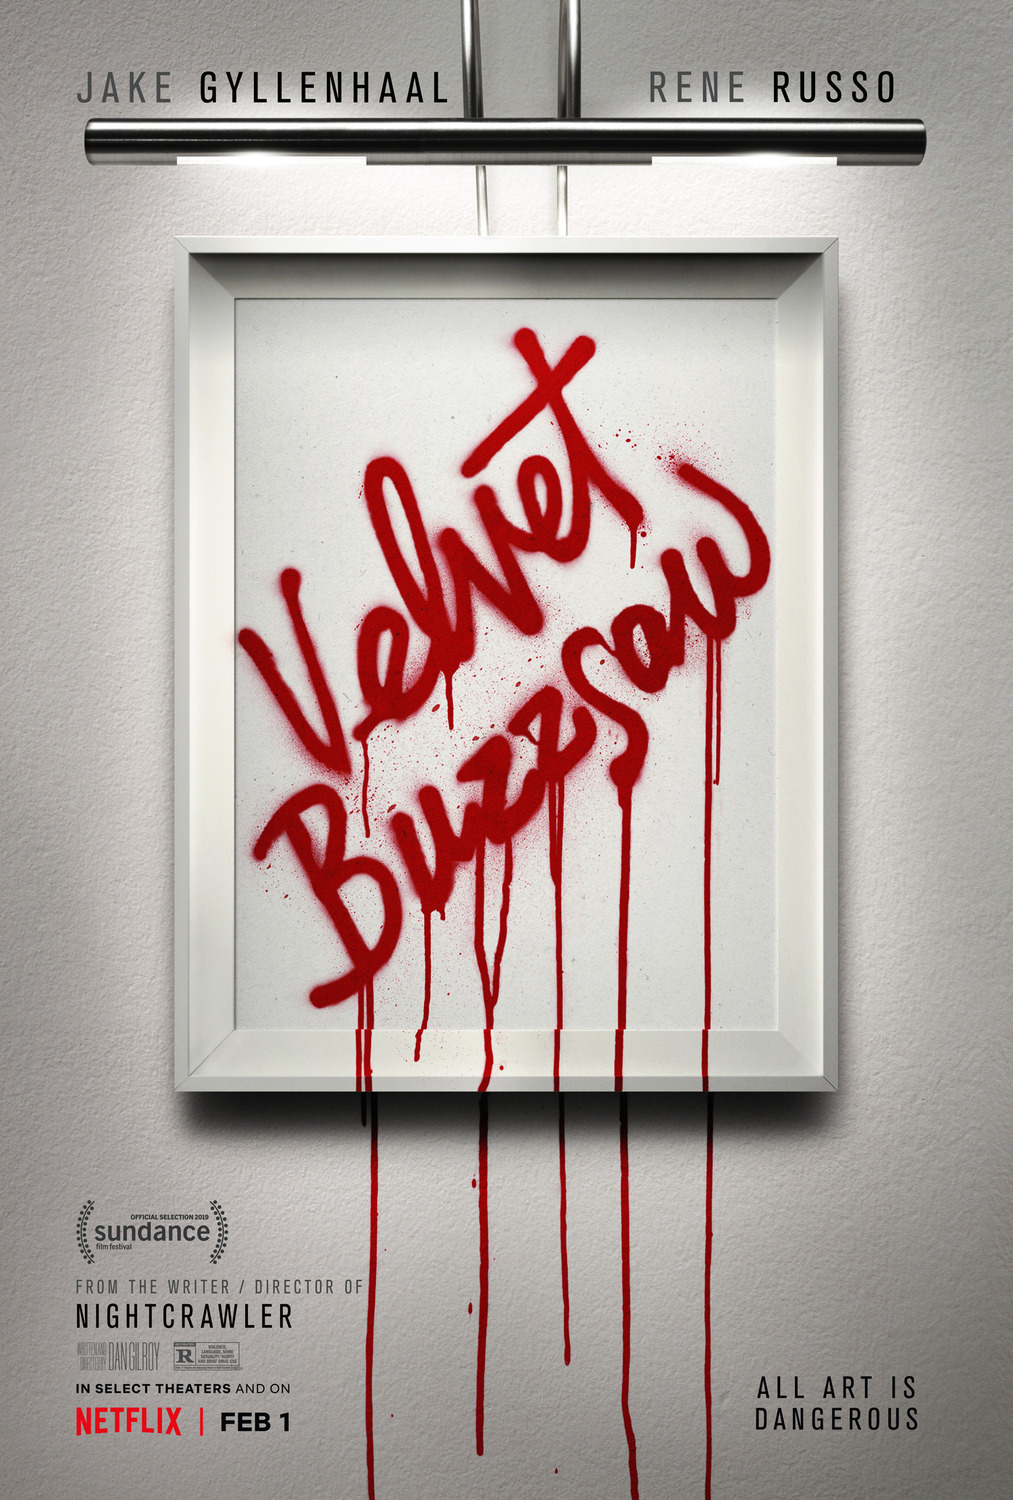 Extra Large Movie Poster Image for Velvet Buzzsaw 